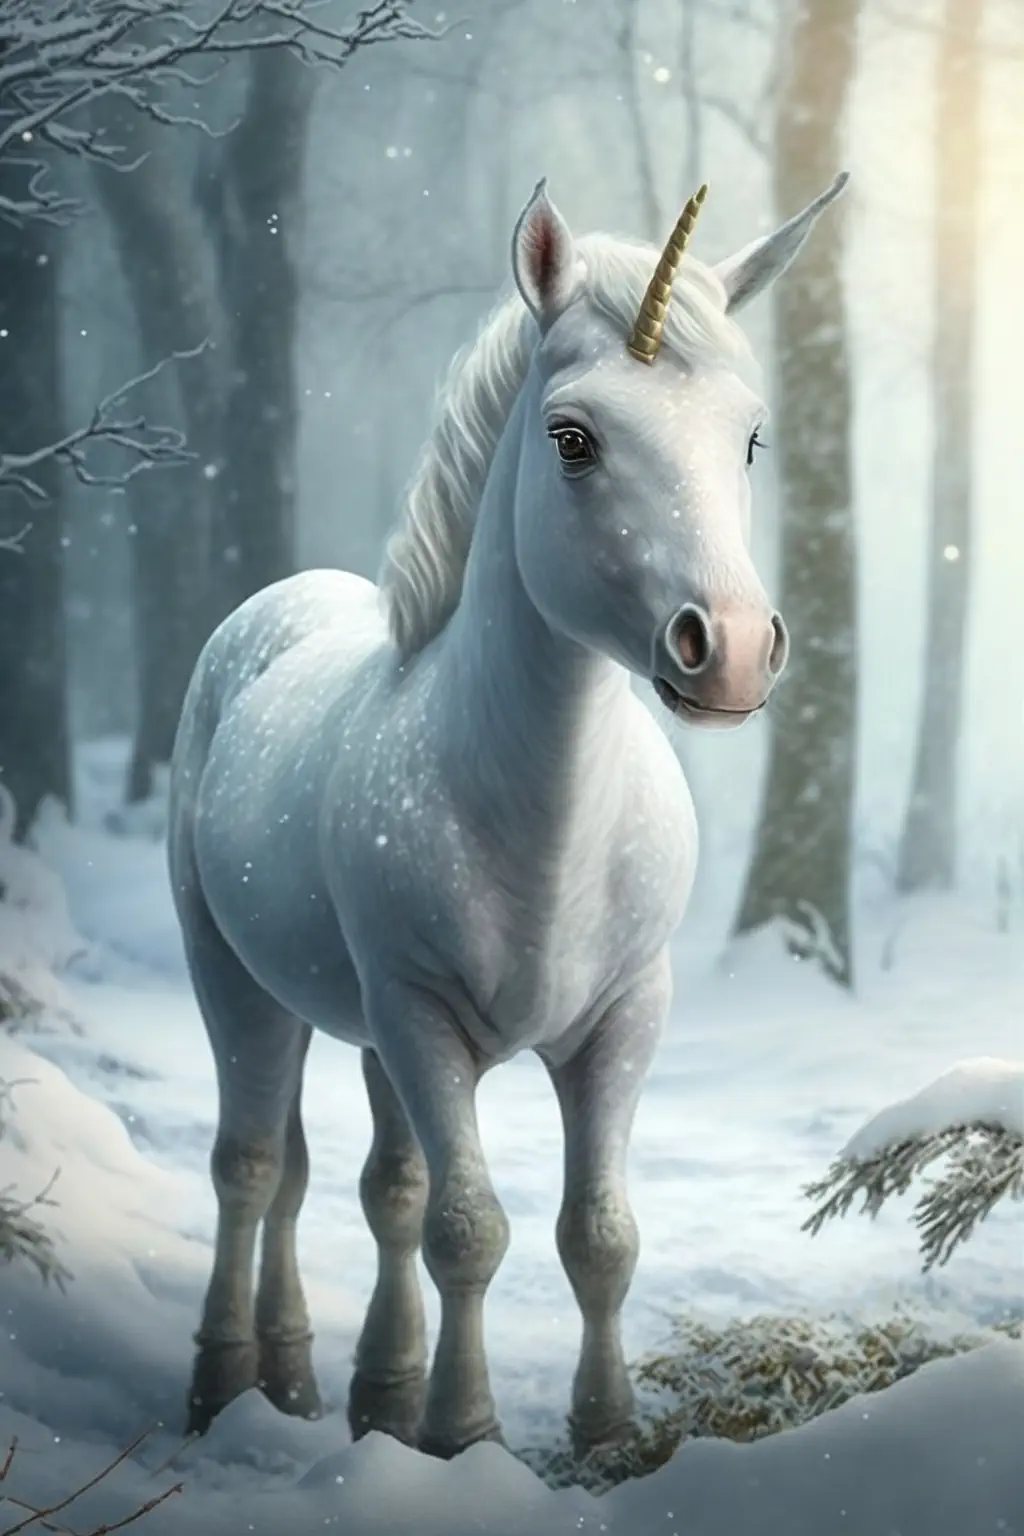 Drak0nchik_baby_unicorn_in_winter_forest_510b2545-e3b9-41eb-bb4a-a5a915527ca3